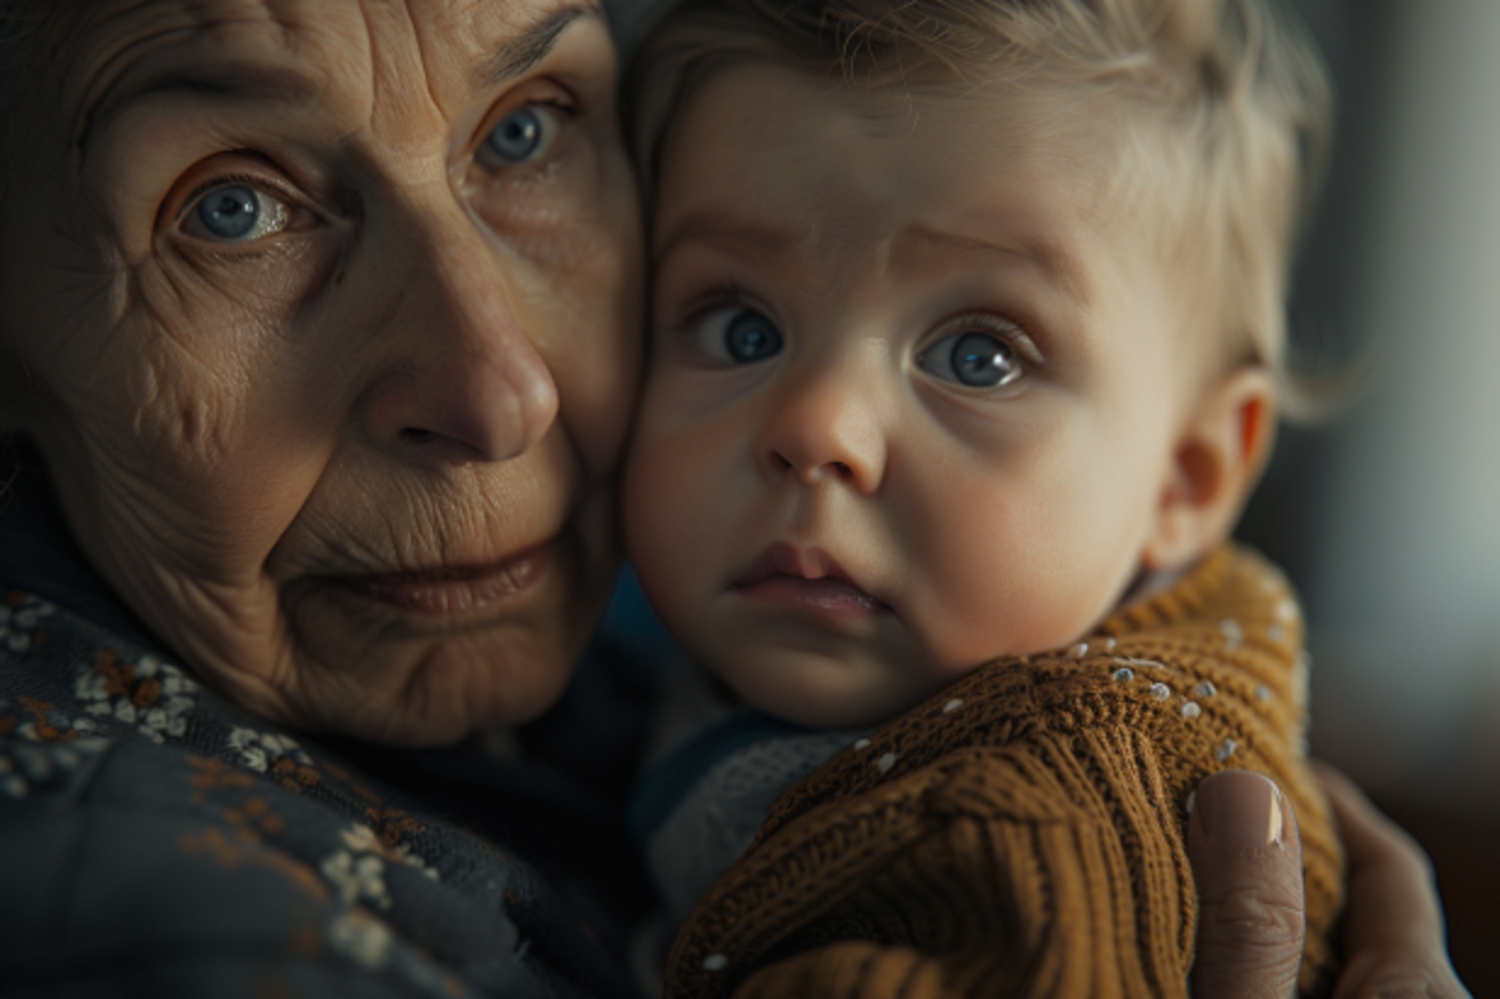 Grandma with grandson | Source: Midjourney